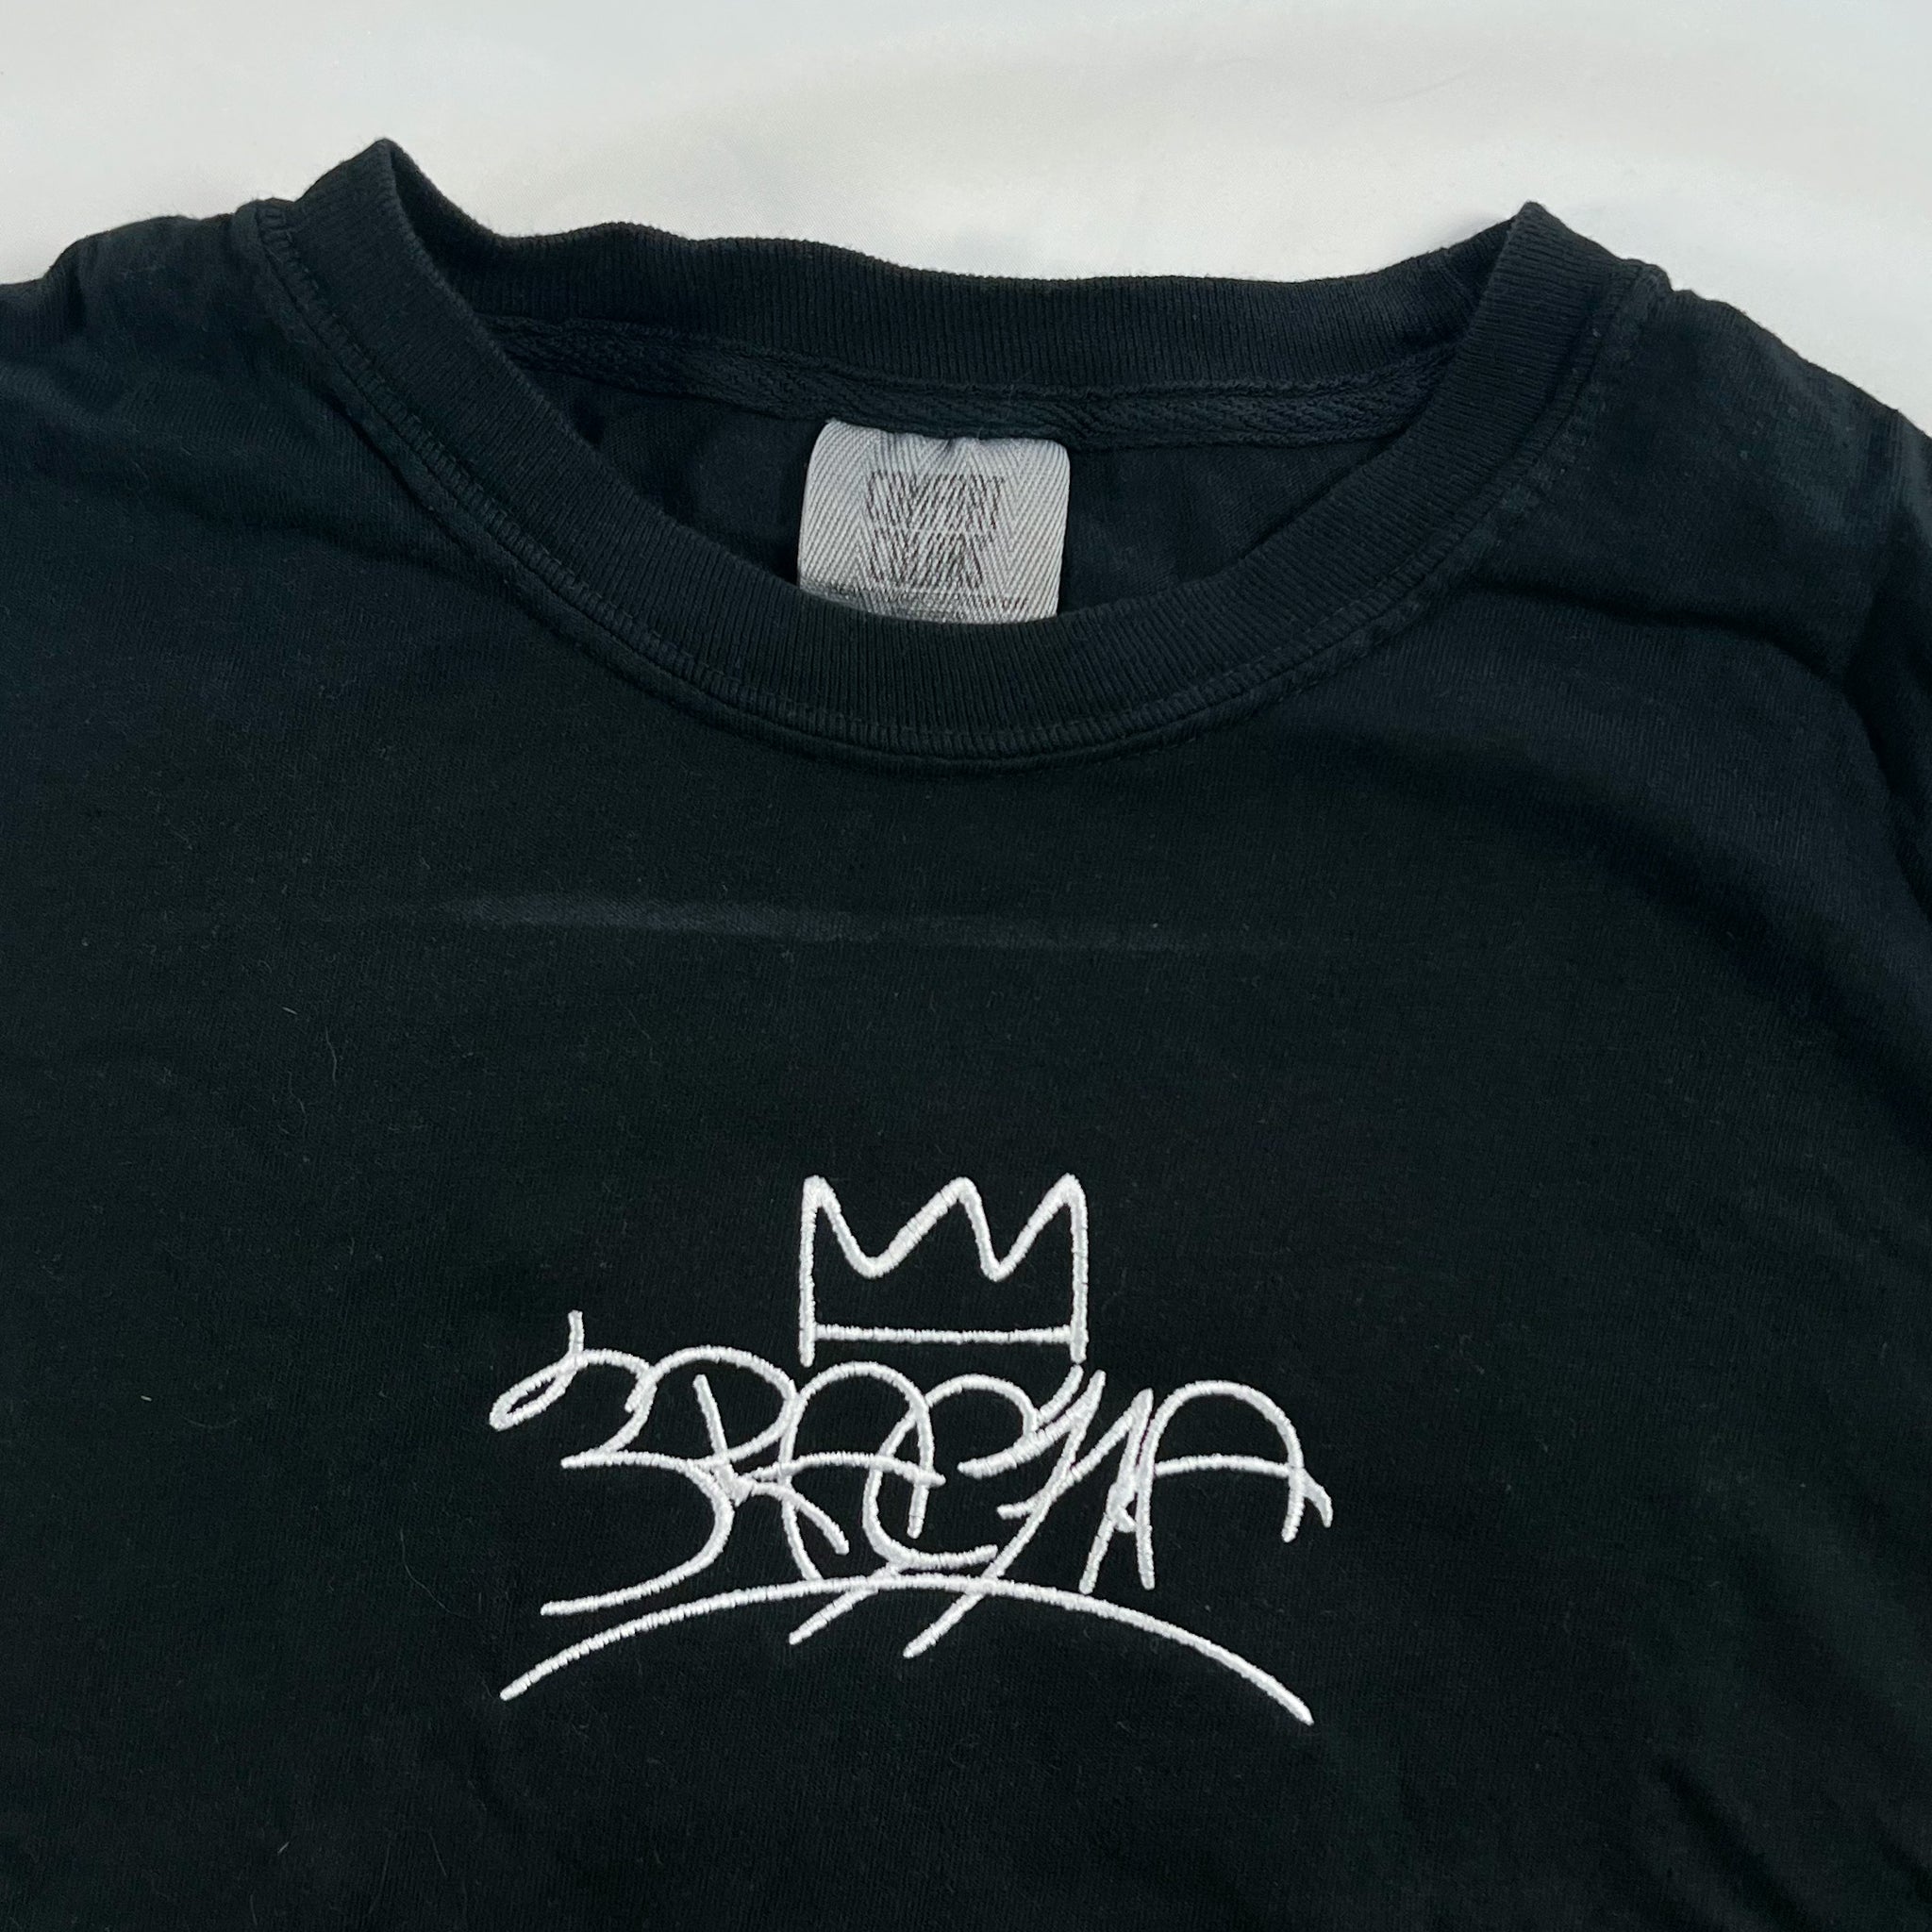 Stray Kids 3racha T-shirt – shopgoldencarat